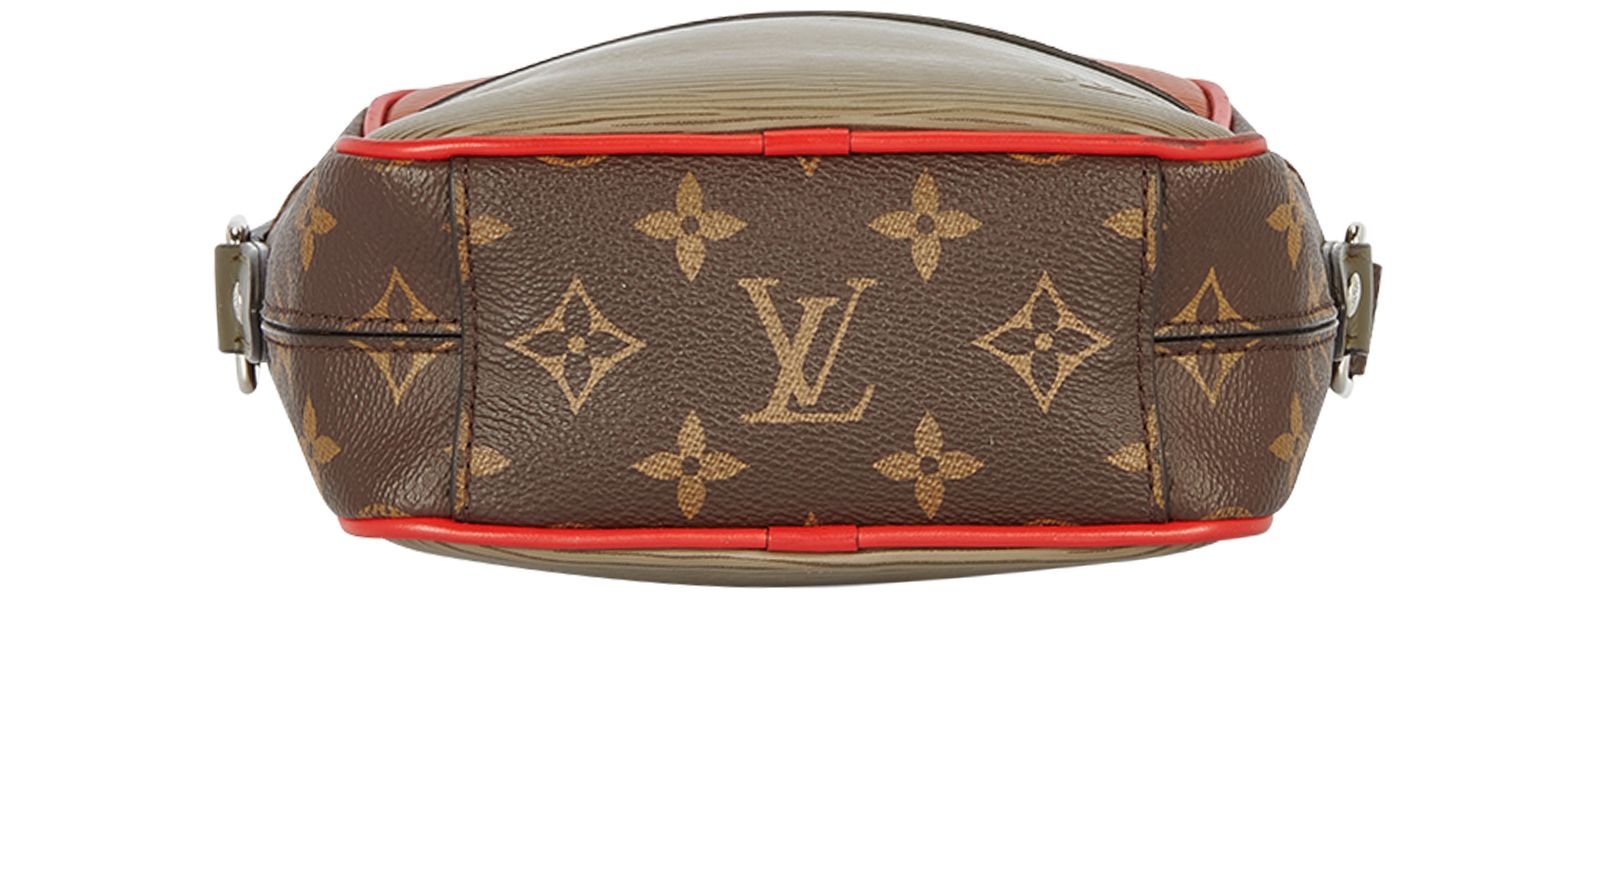 Louis Vuitton Danube Slim Pm for Men